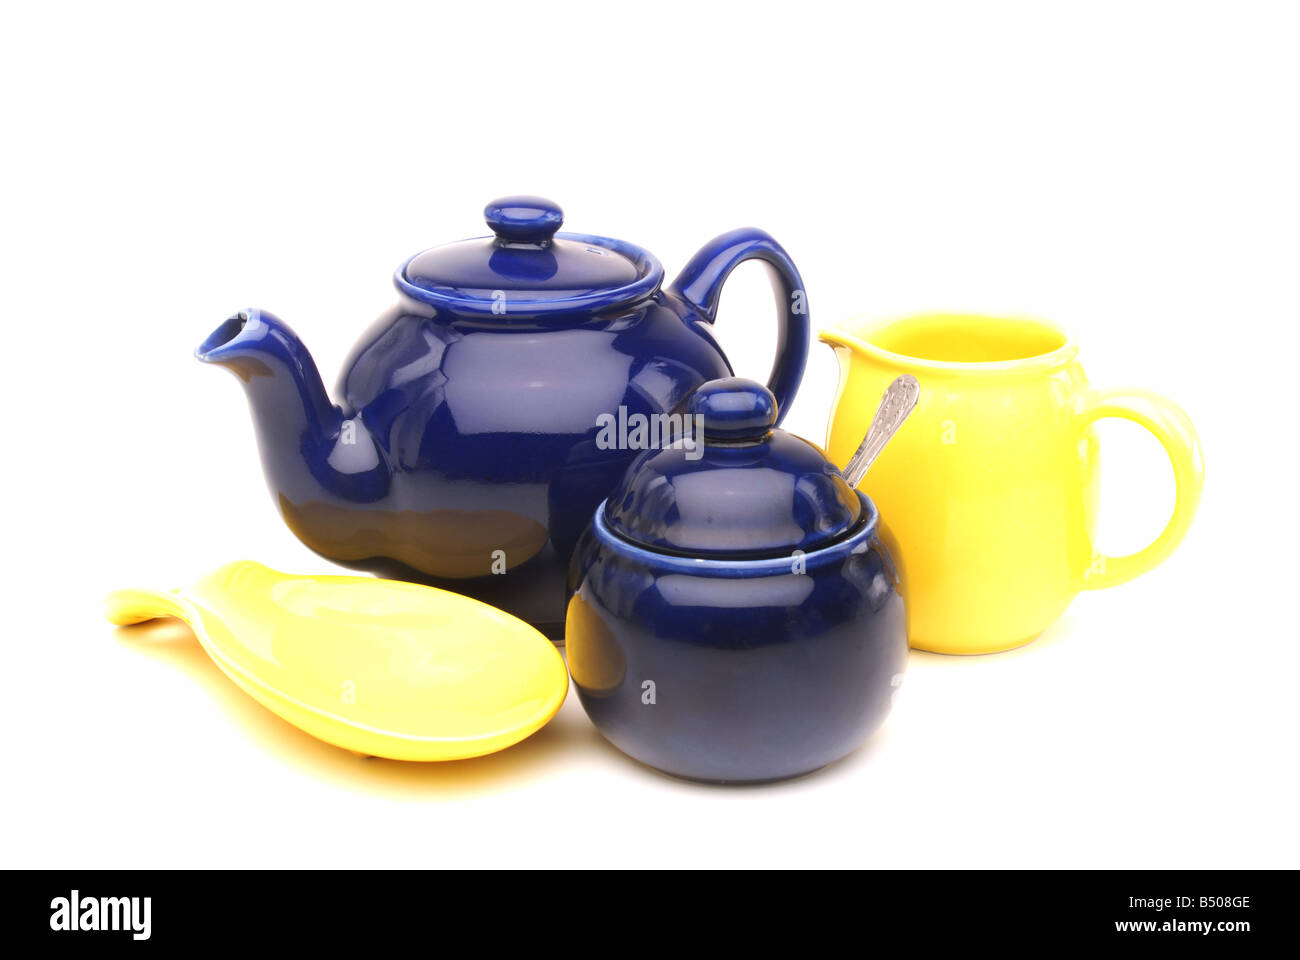 Tea pot, milk jug and sugar pot on white background. Stock Photo